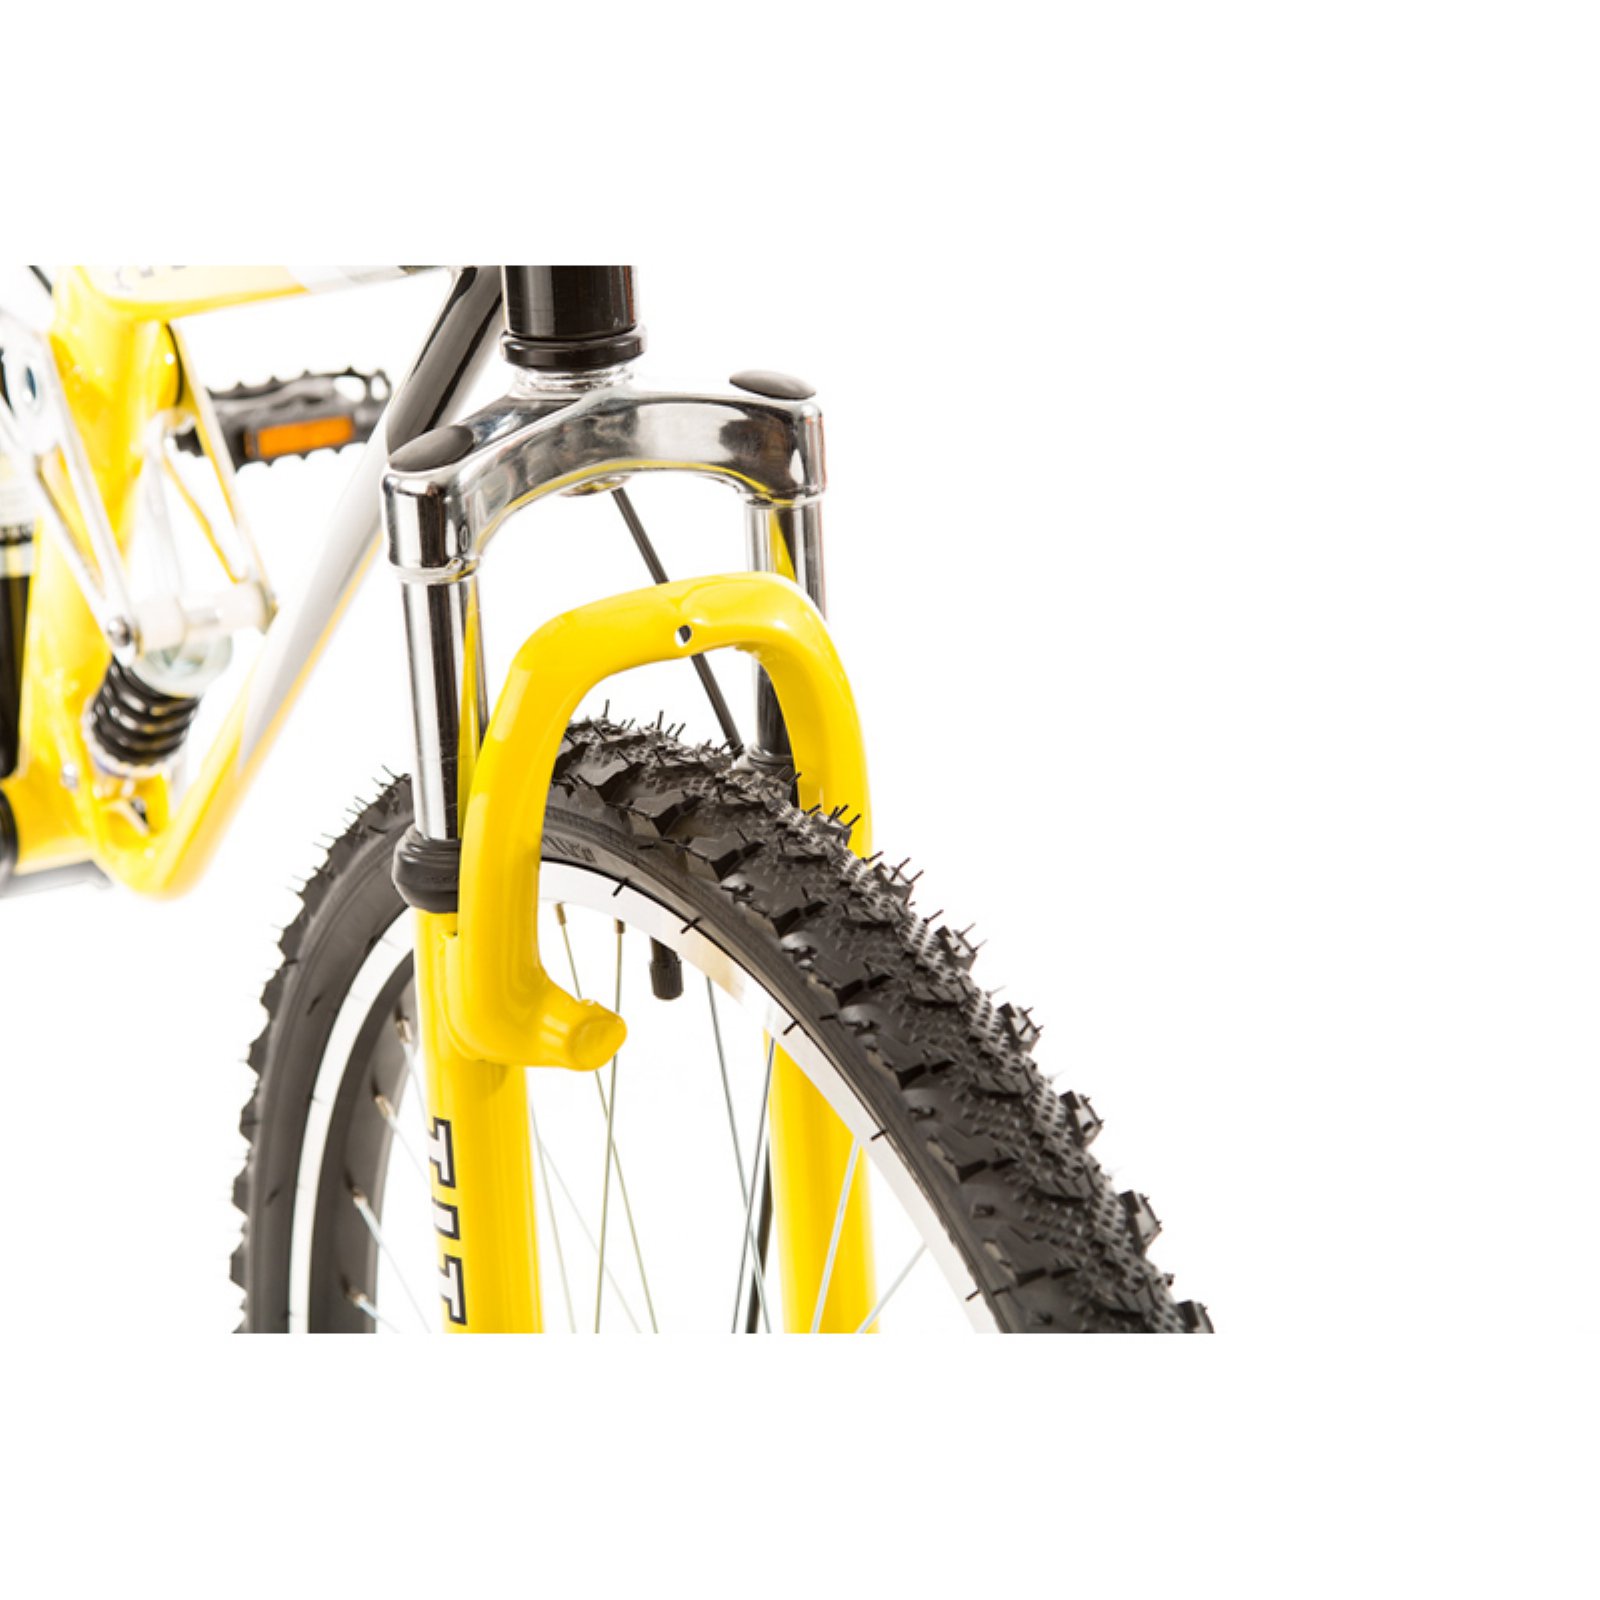 19" Titan Glacier-Pro Men's Mountain Bike, Yellow/Black - image 4 of 11